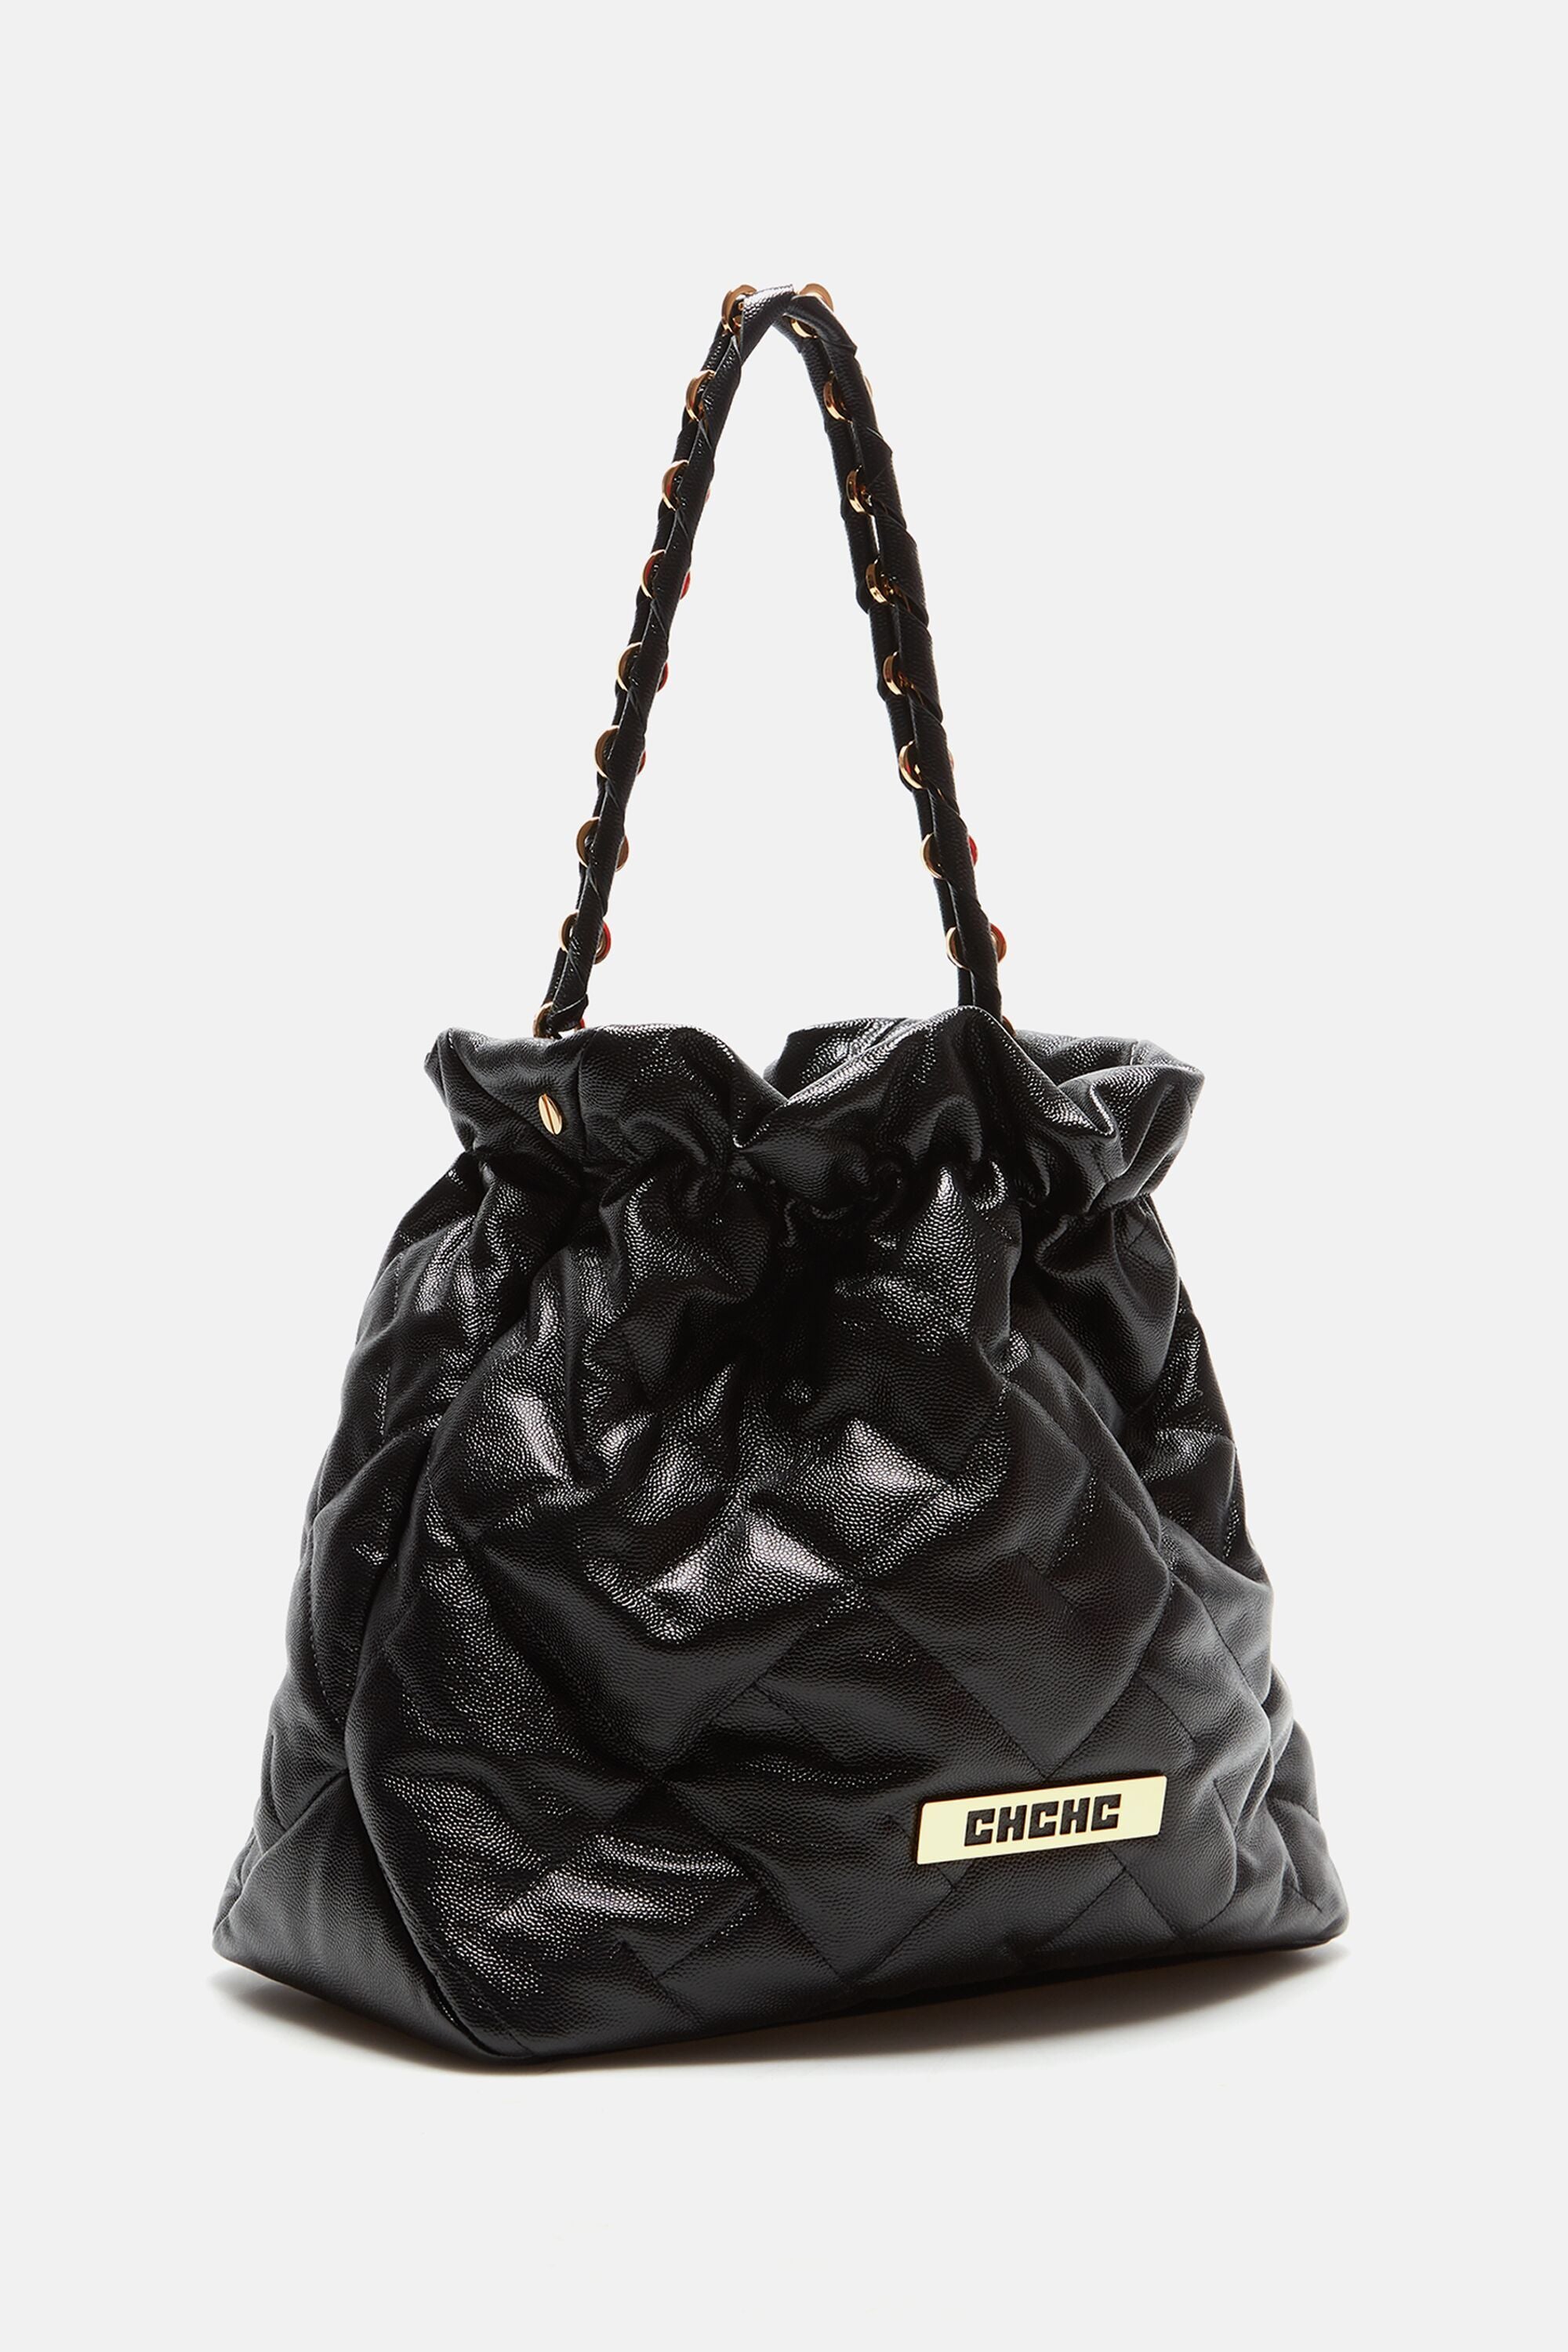 Carolina Herrera Black Stitched Leather Bimba Shoulder Bag CH Carolina  Herrera